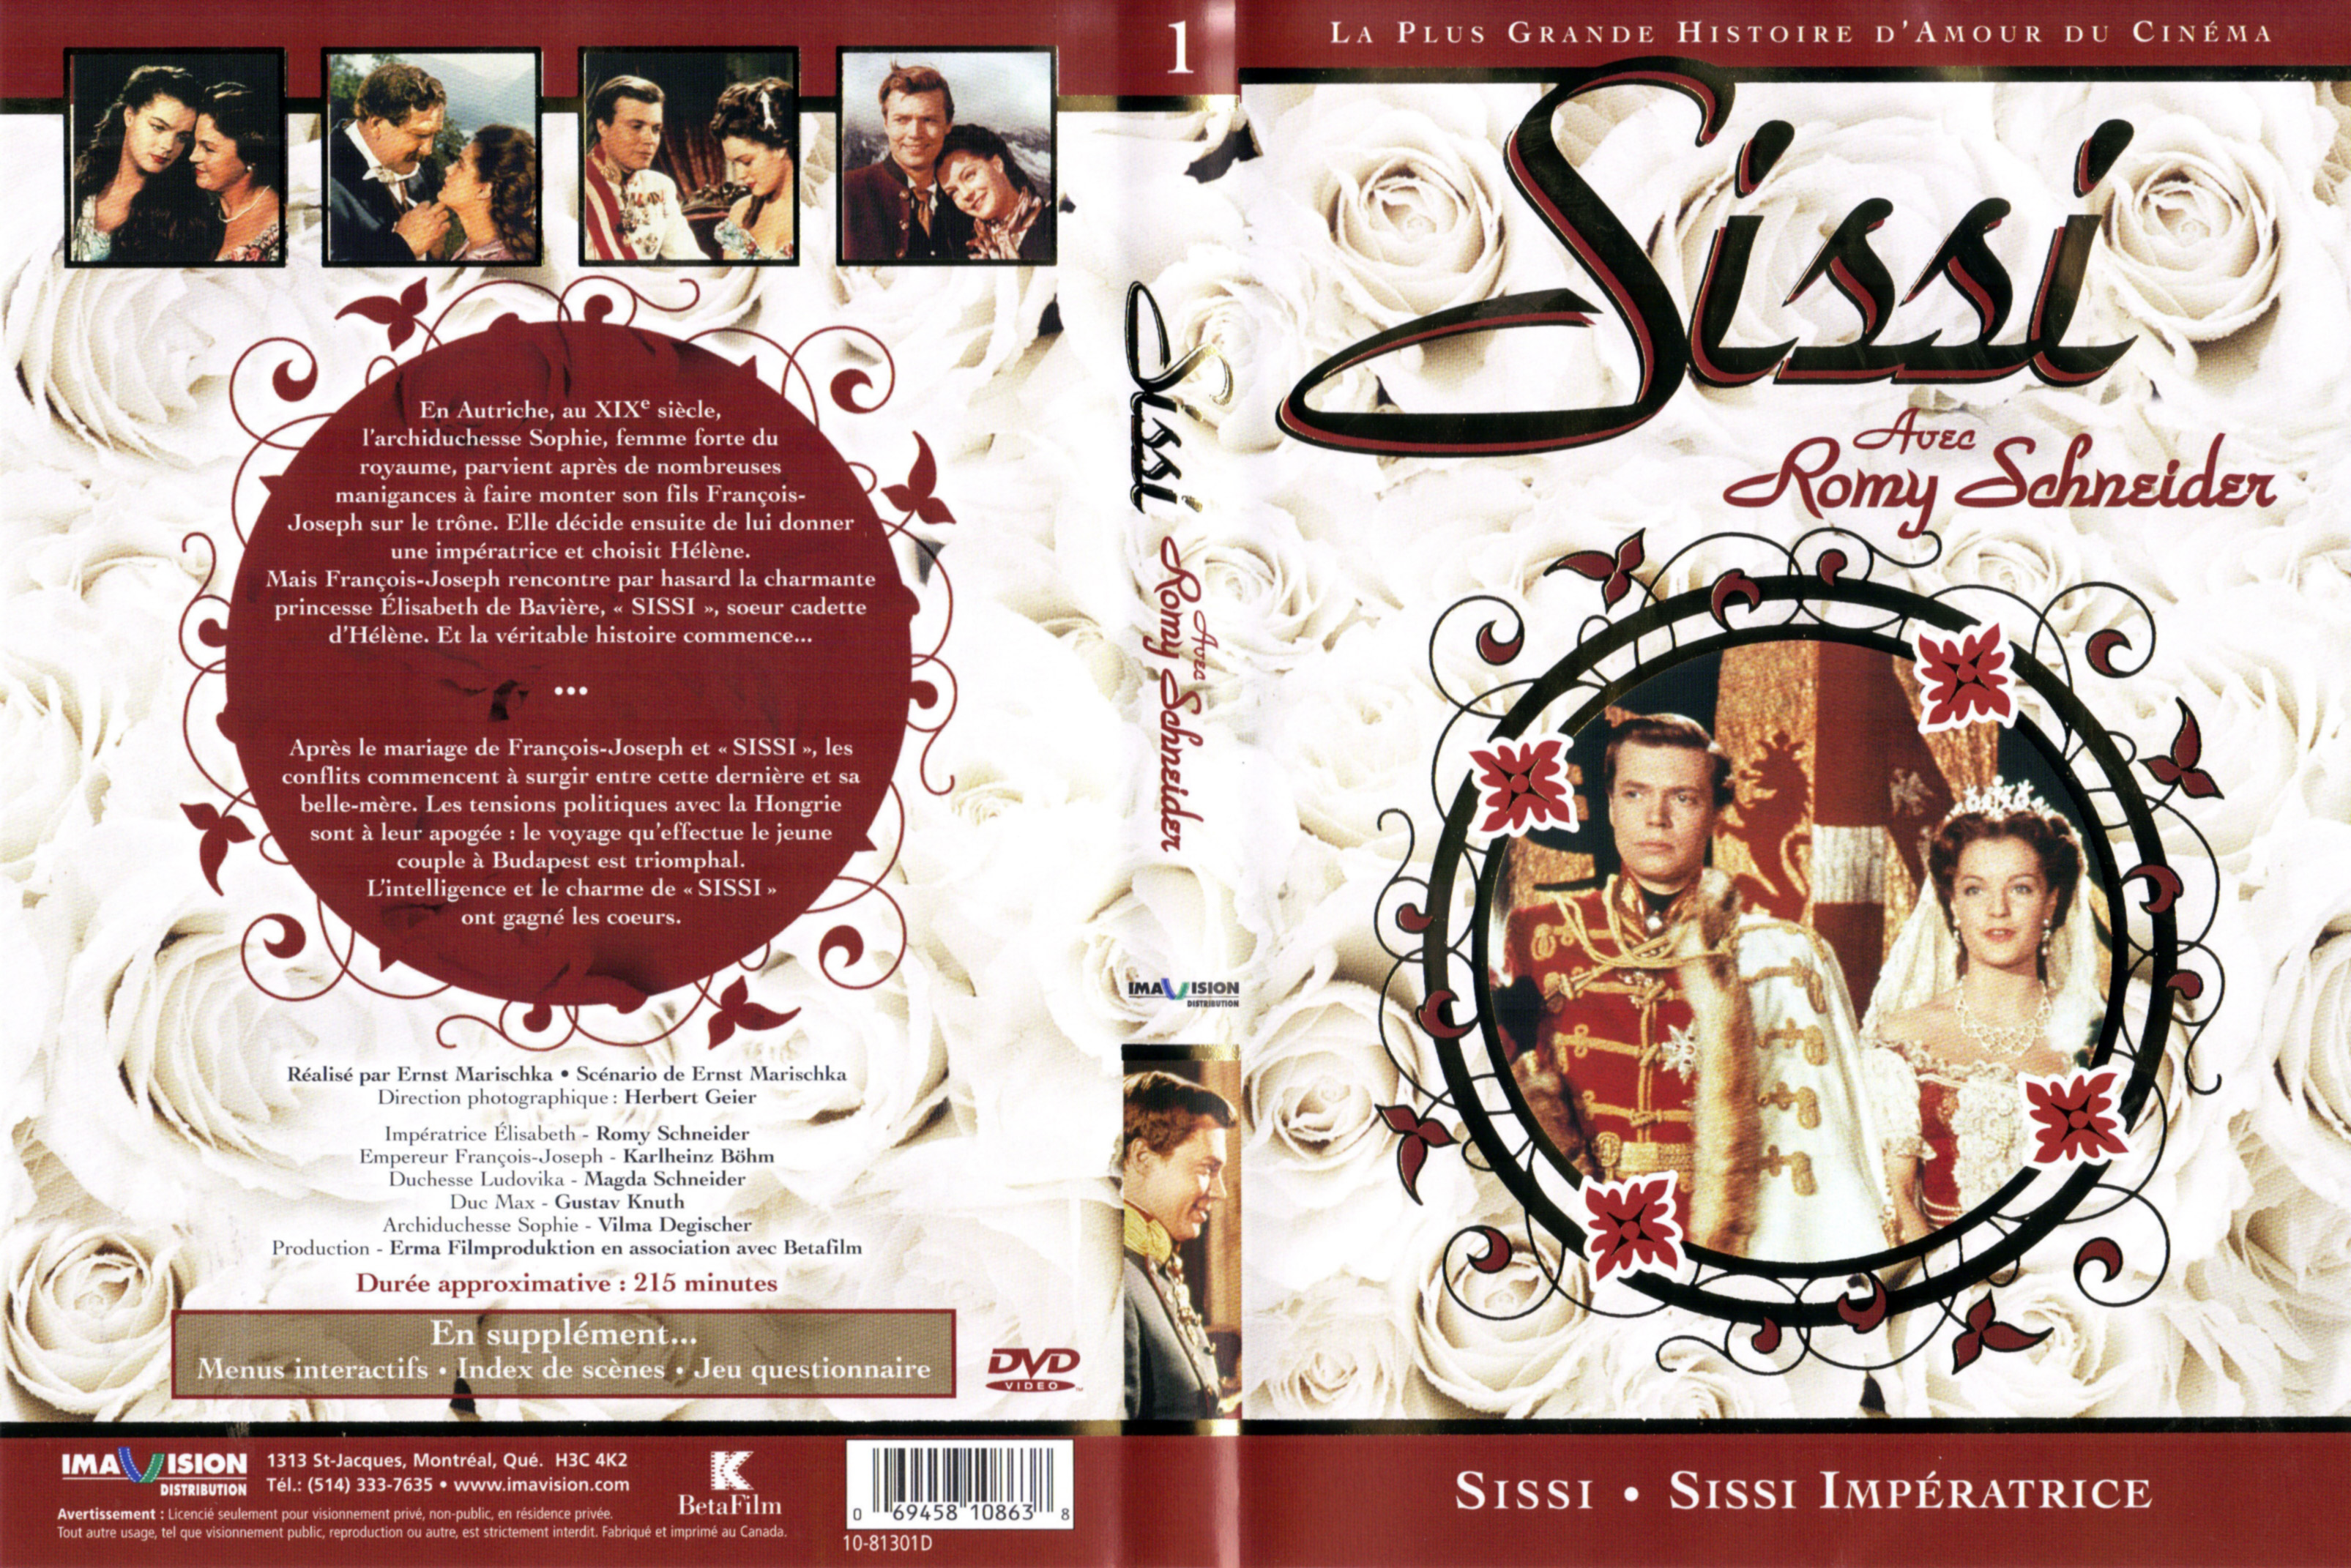 Jaquette DVD Sissi + Sissi imperatrice d